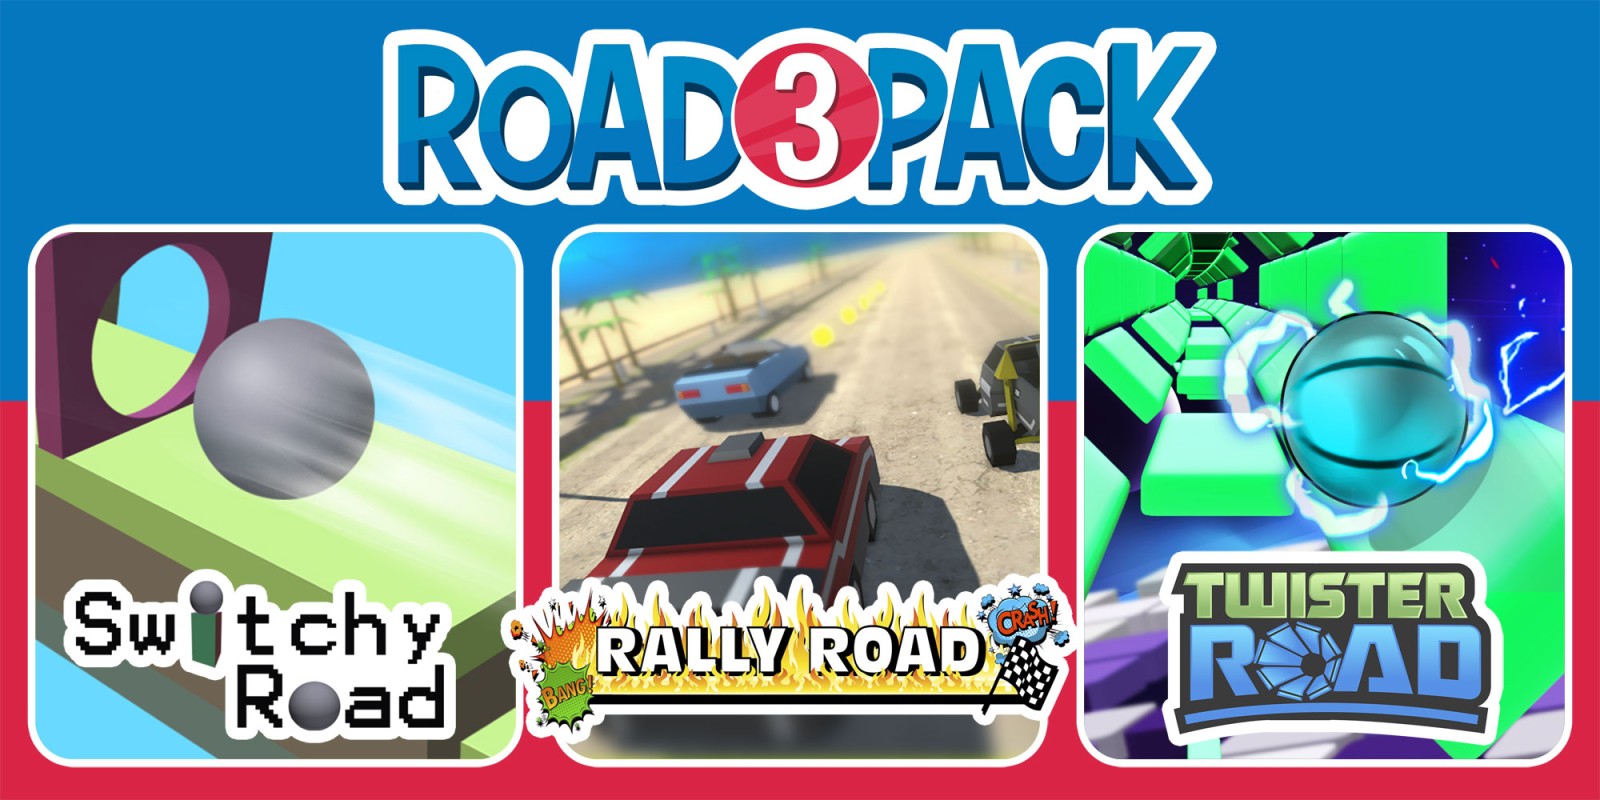 Road 3 Pack